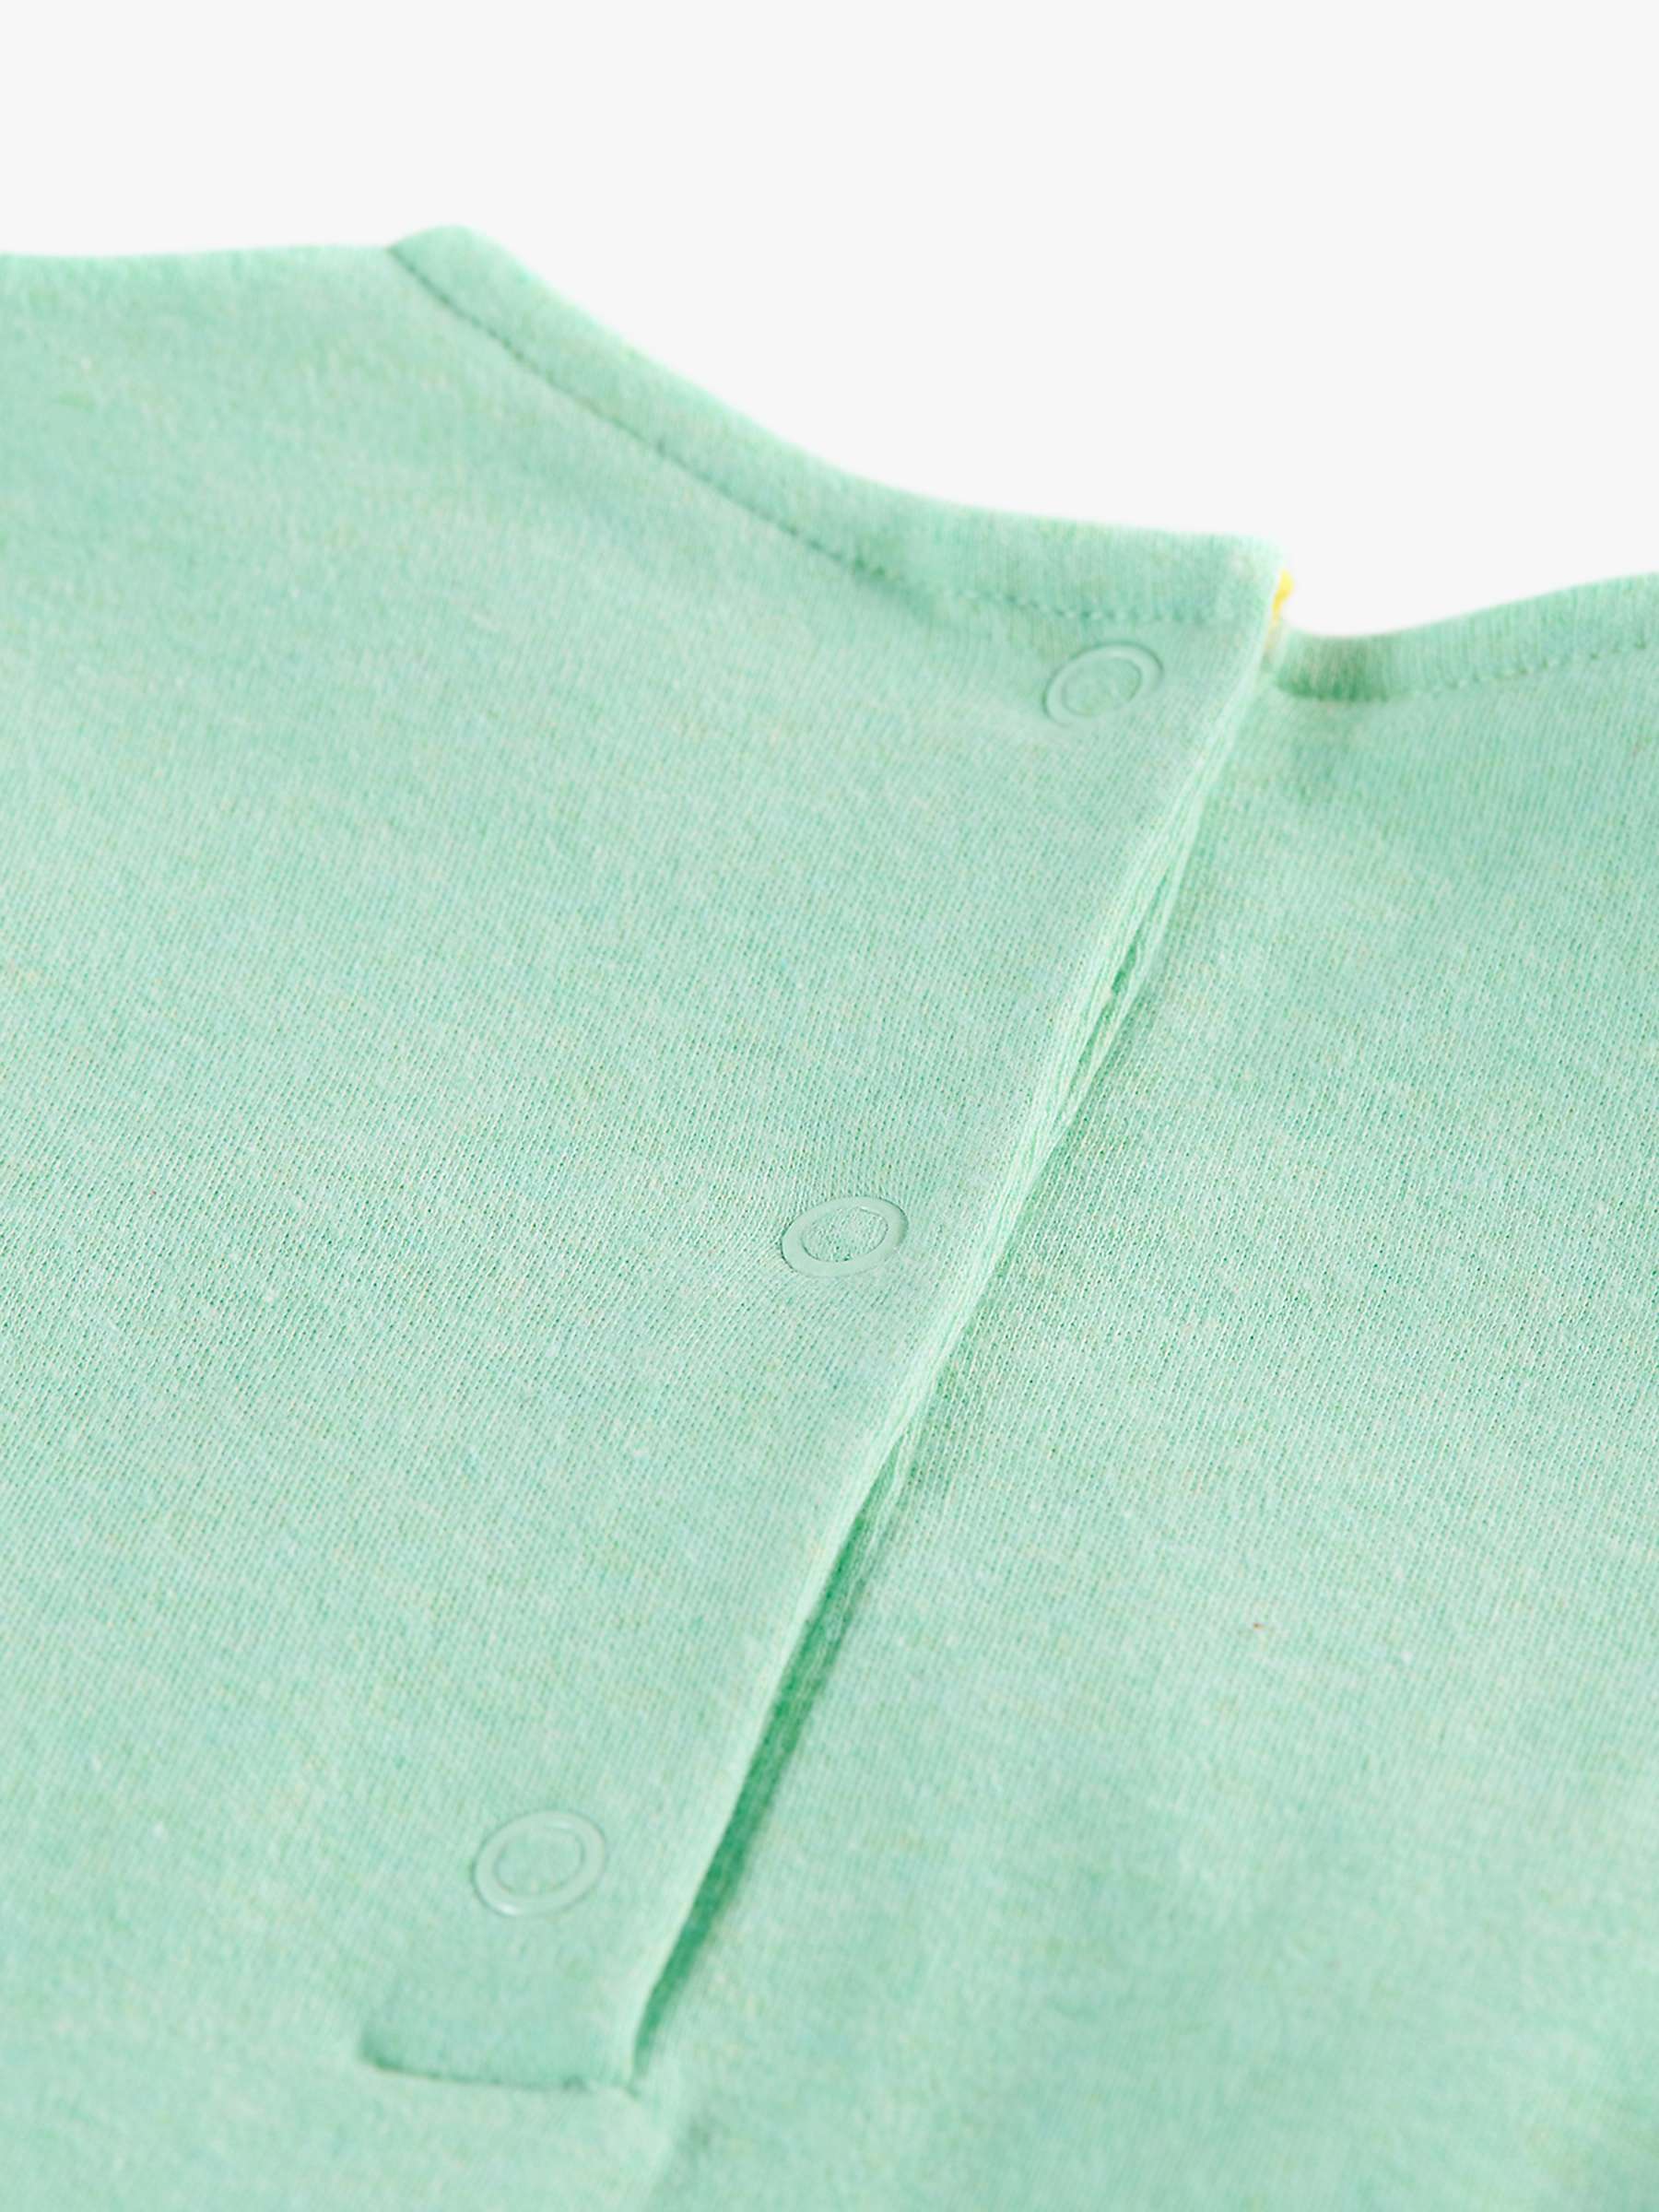 Buy Frugi Baby Organic Cotton Little Layla Applique Dress Online at johnlewis.com